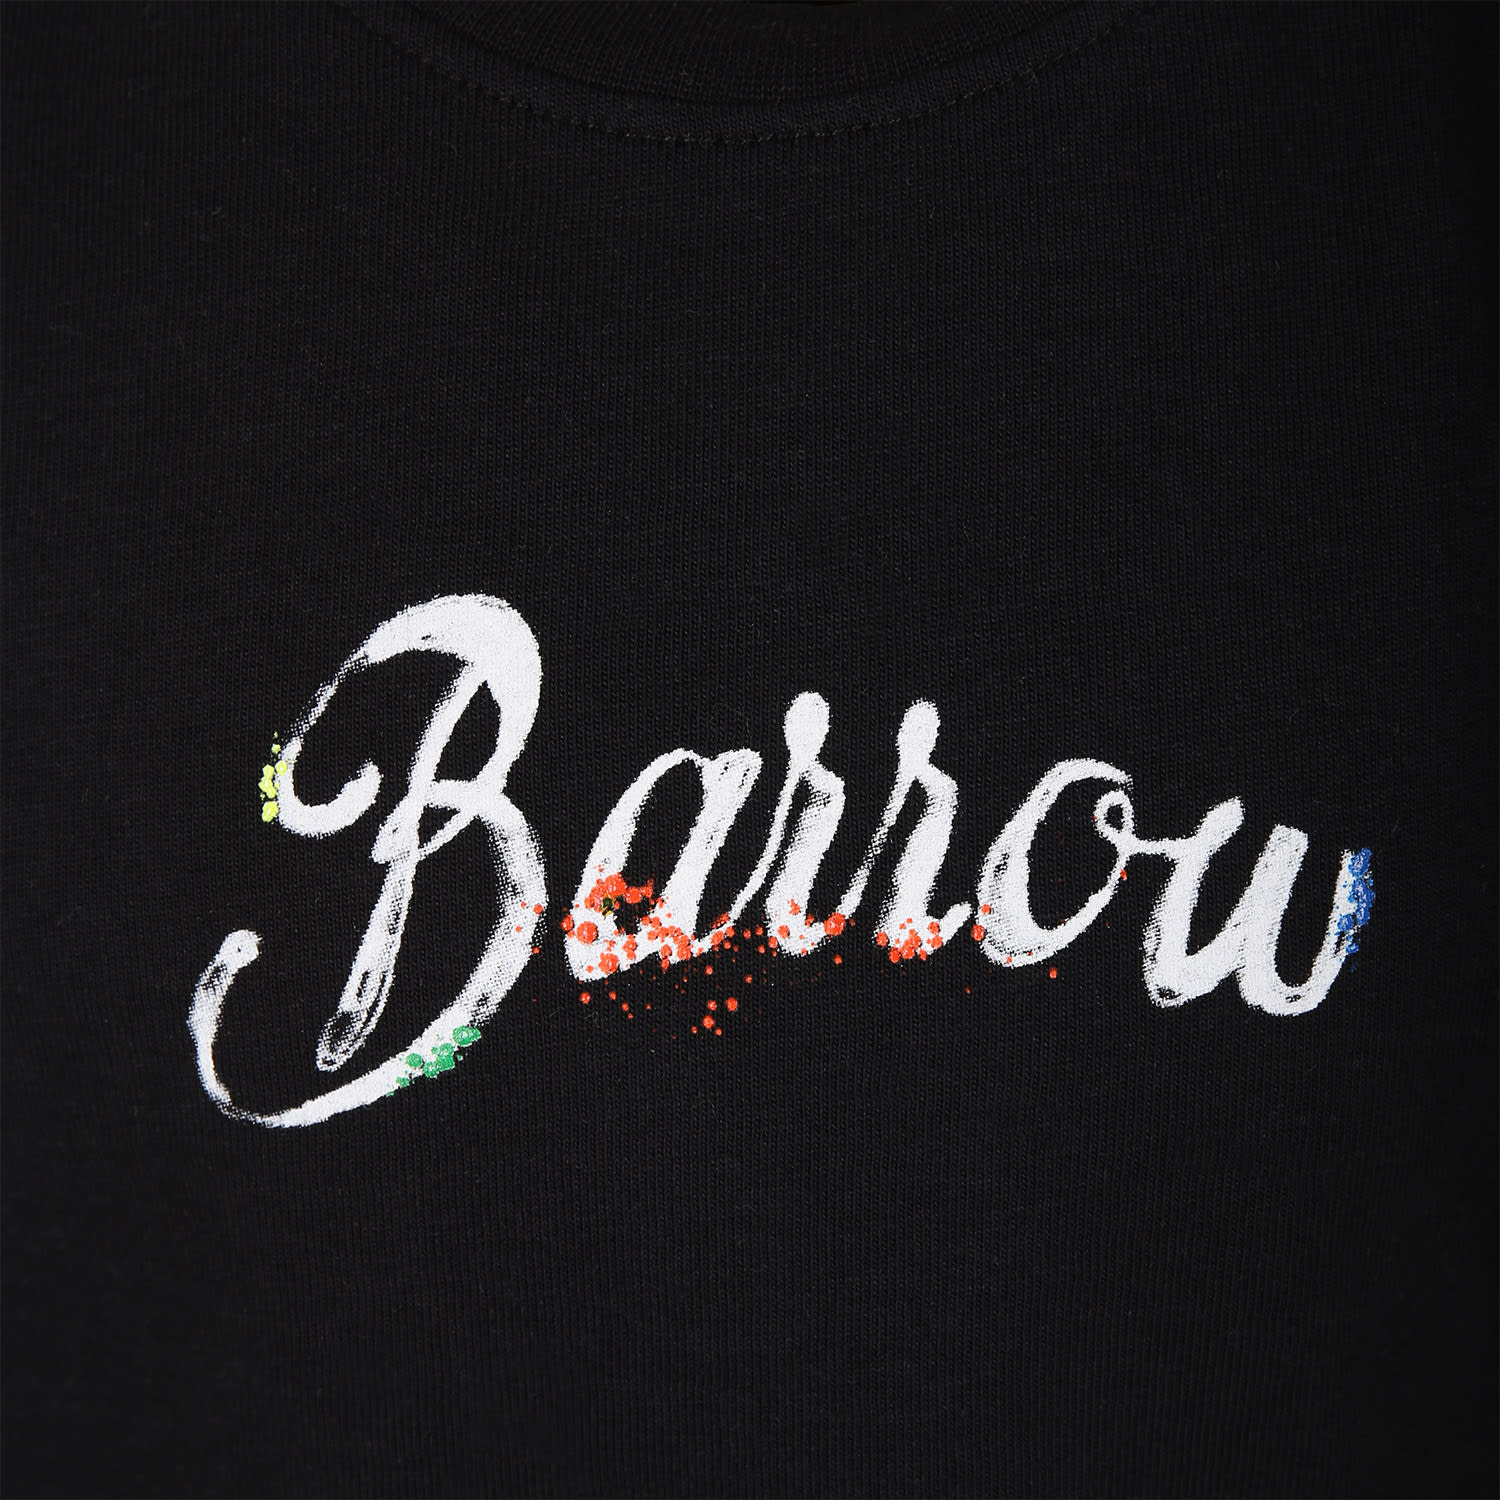 Shop Barrow Black T-shirt For Kids With Logo